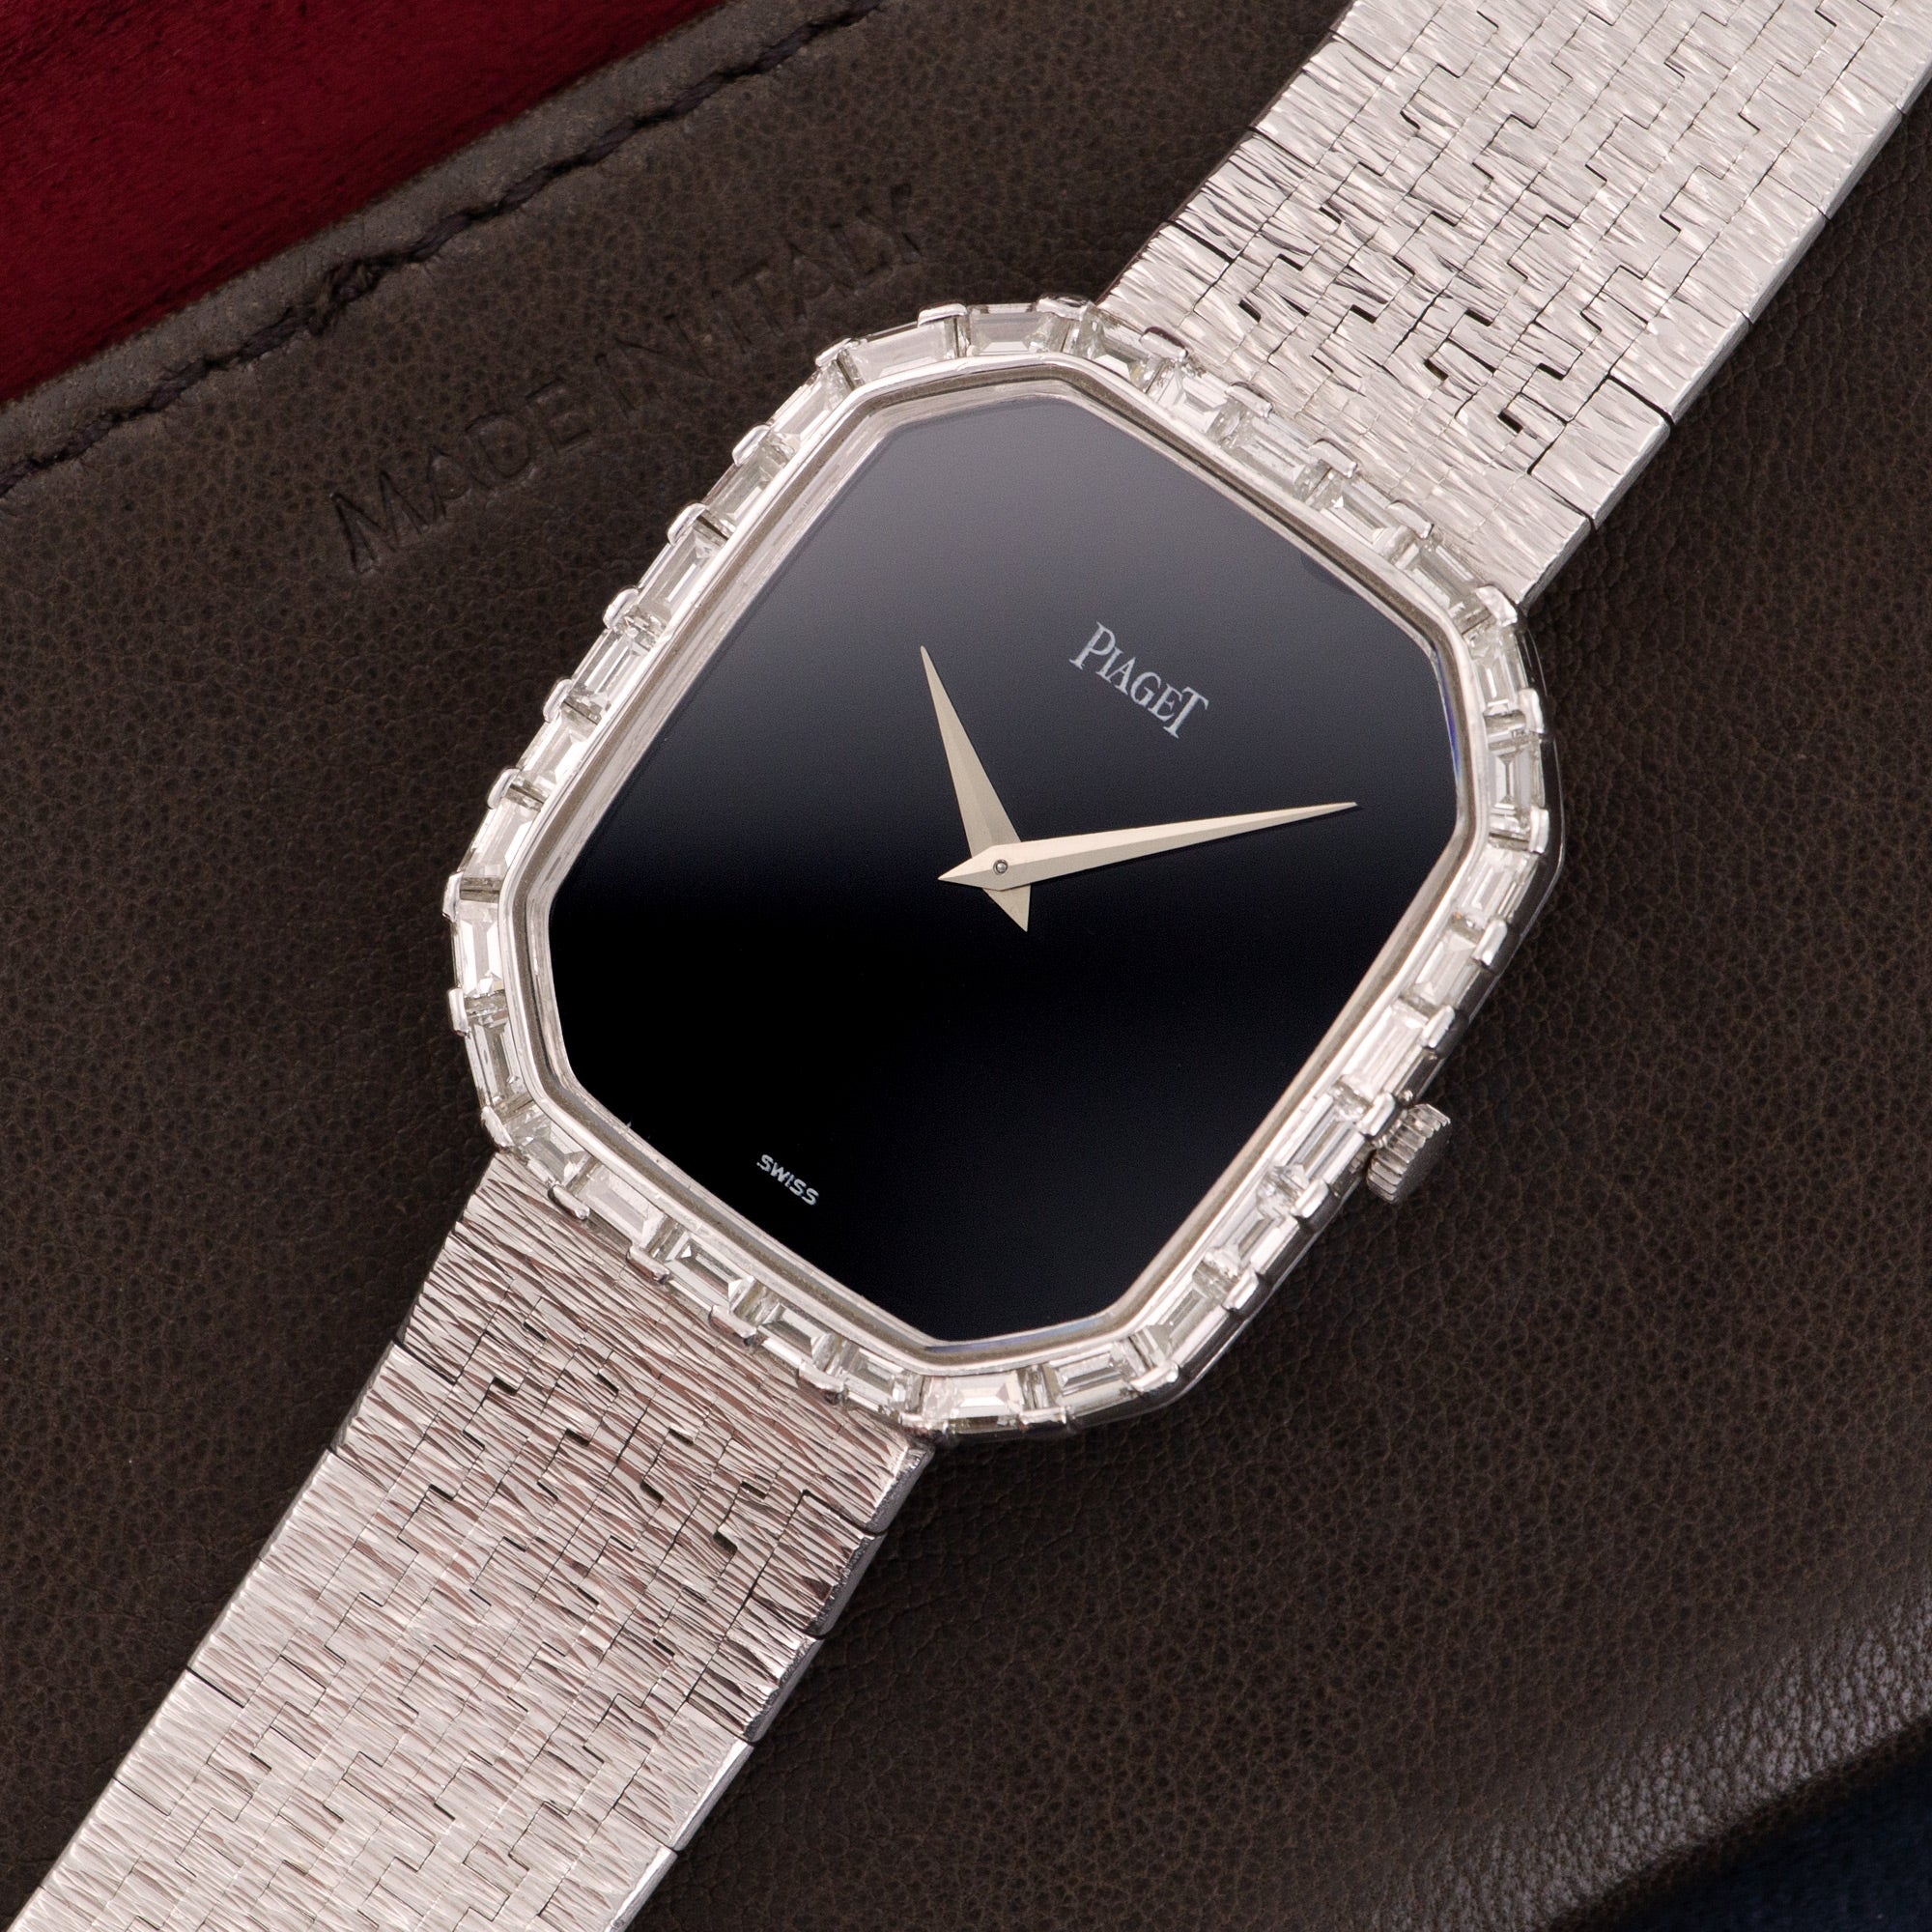 Piaget - Piaget White Gold Onyx & Baguette Diamond Watch - The Keystone Watches